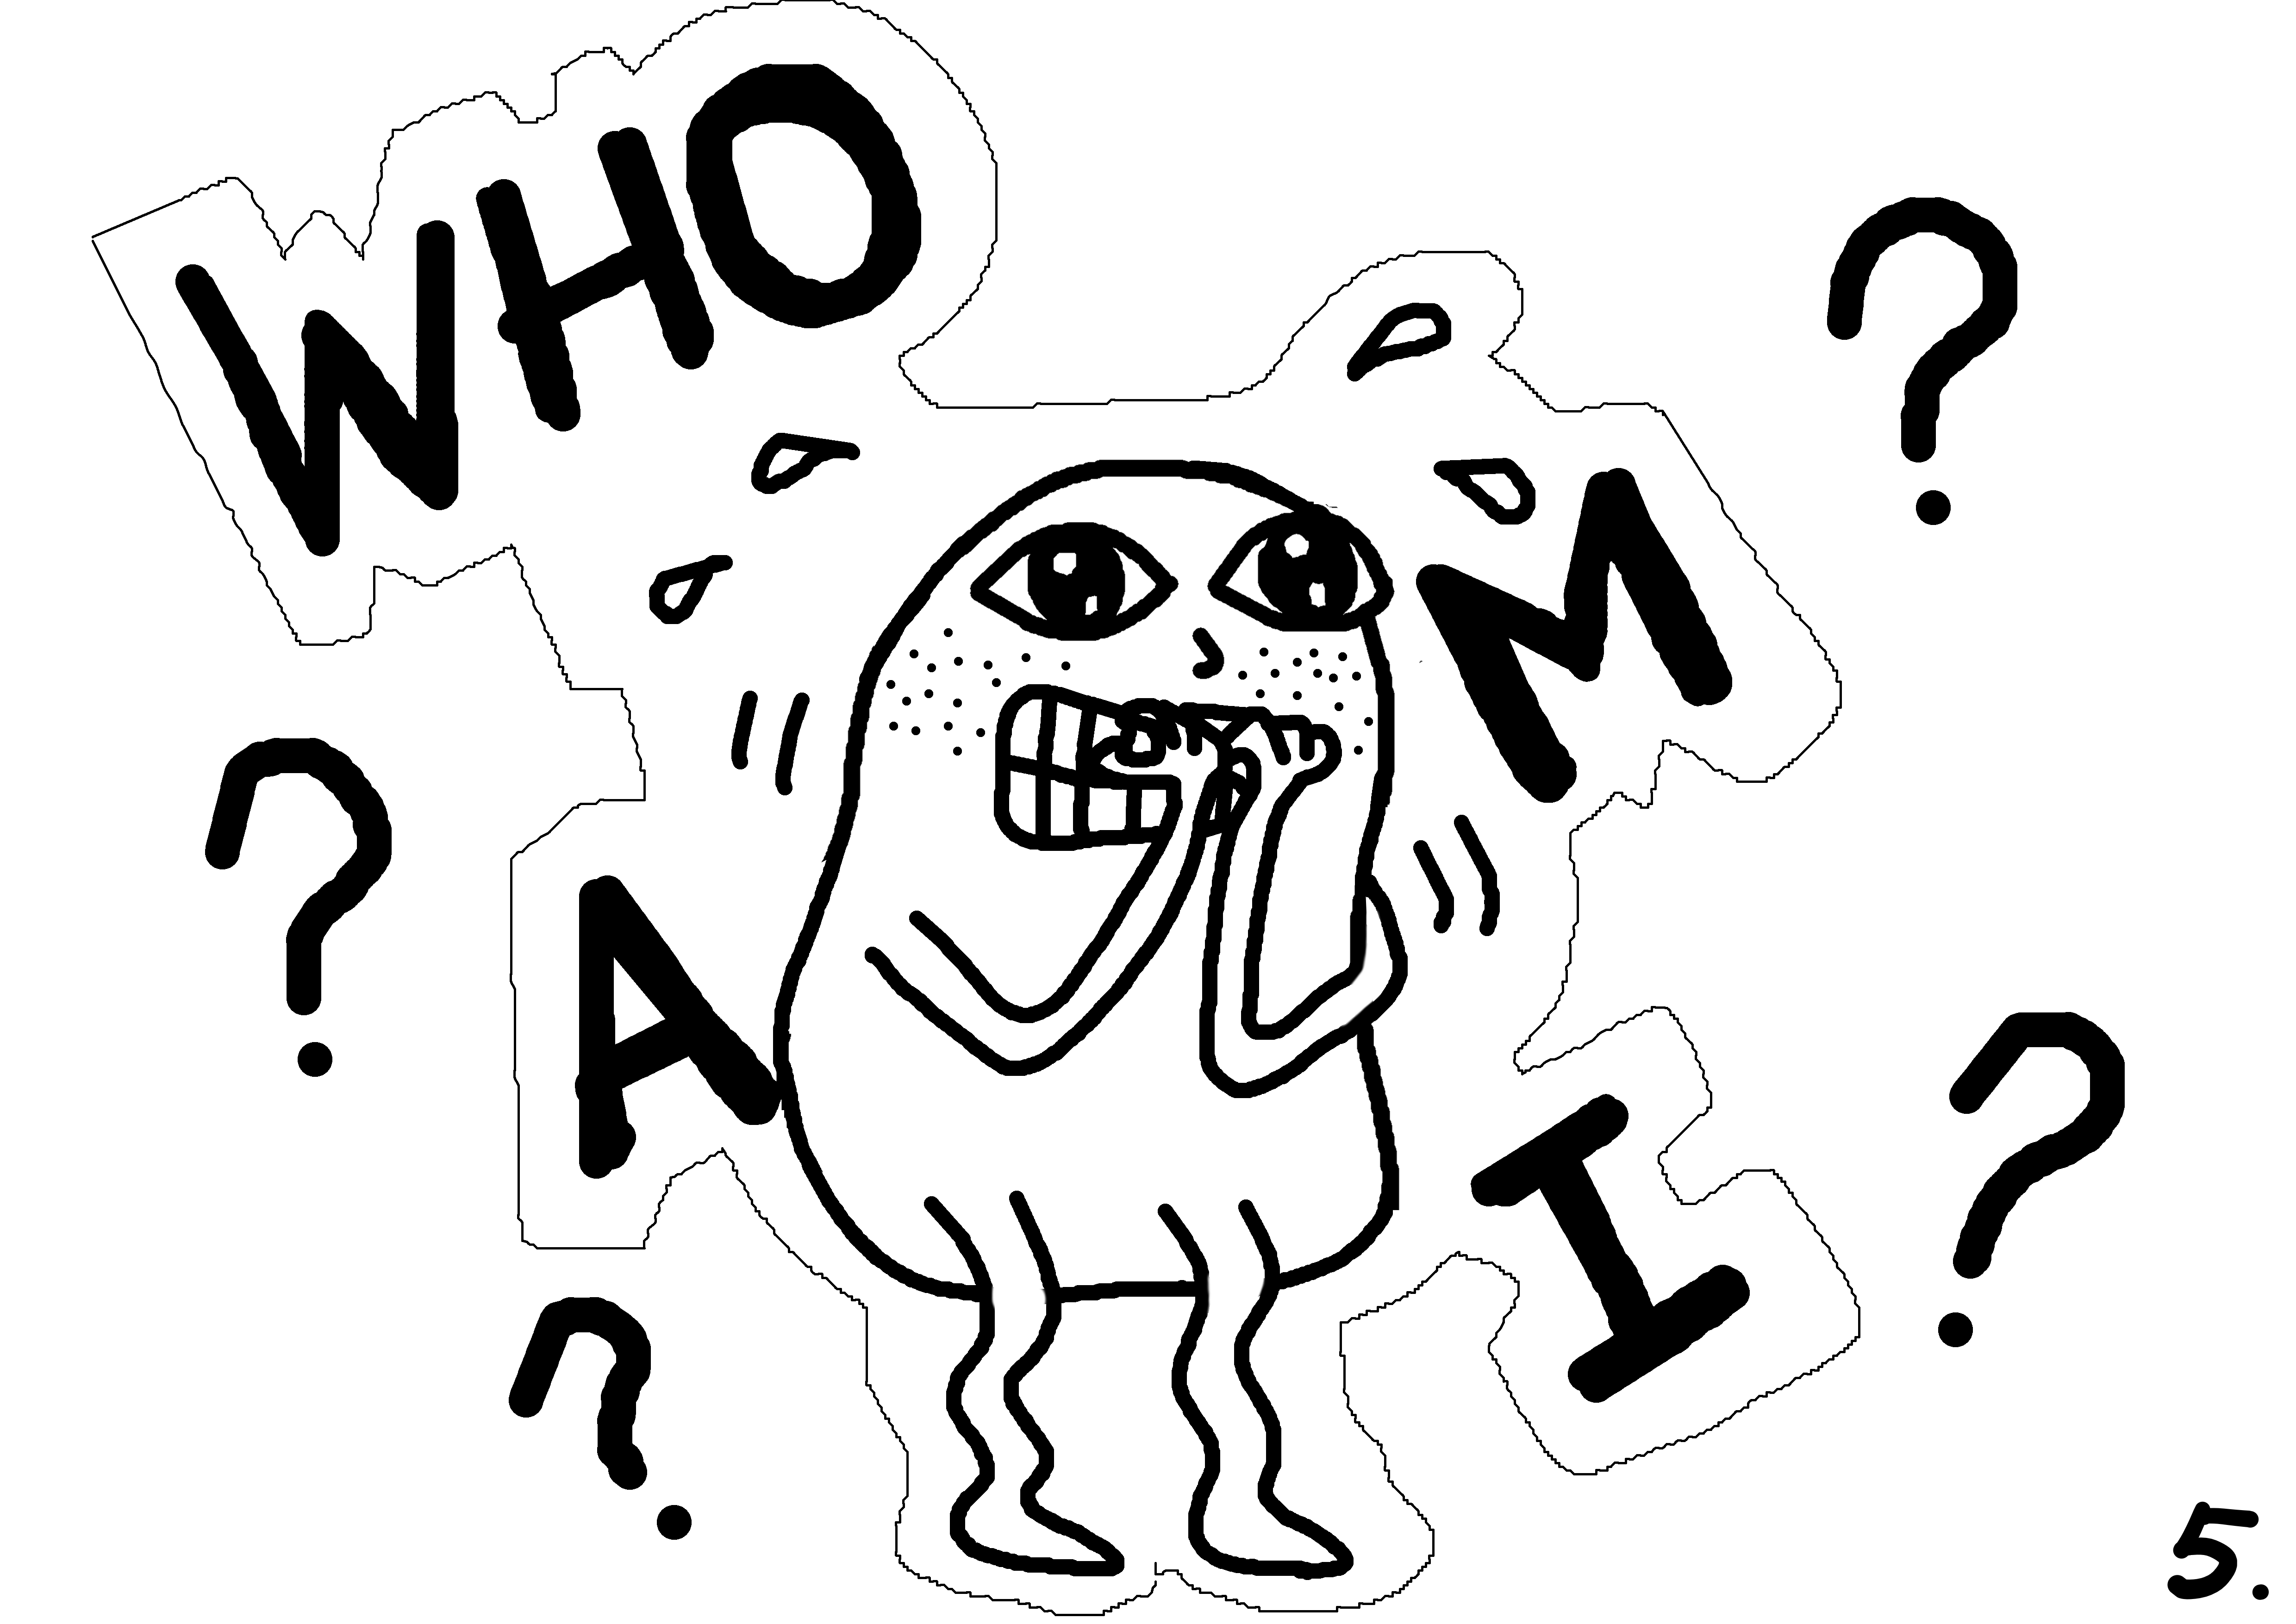 5. Who Am I? Potato having an identity crisis 